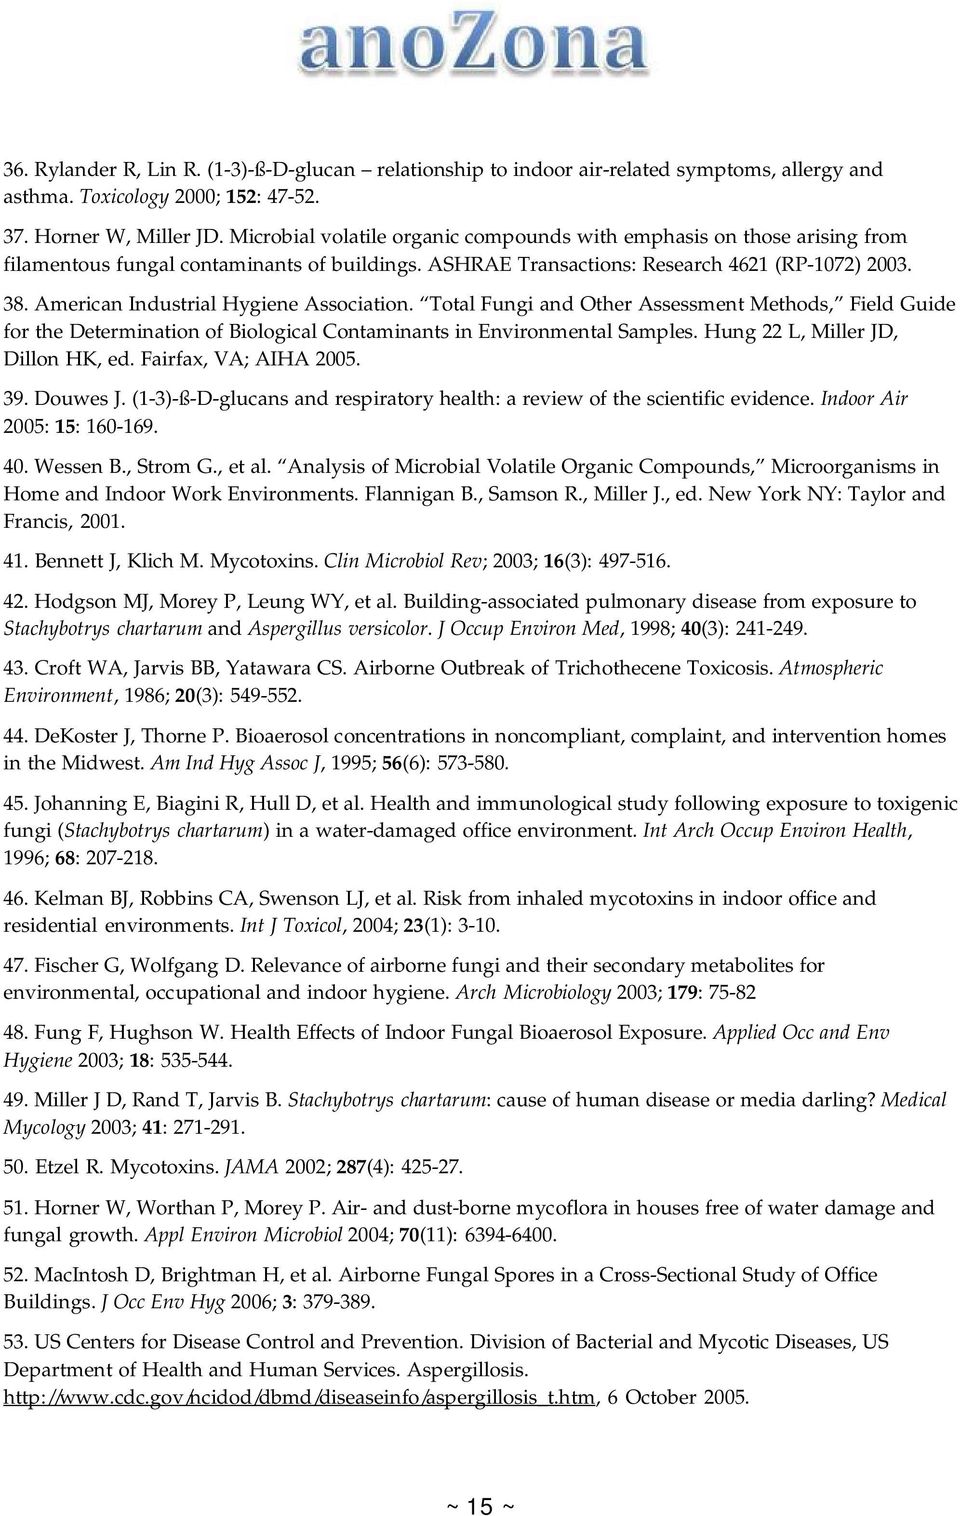 Ttal Fungi and Other Assessment Methds, Field Guide fr the Determinatin f Bilgical Cntaminants in Envirnmental Samples. Hung 22 L, Miller JD, Dilln HK, ed. Fairfax, VA; AIHA 2005. 39. Duwes J.